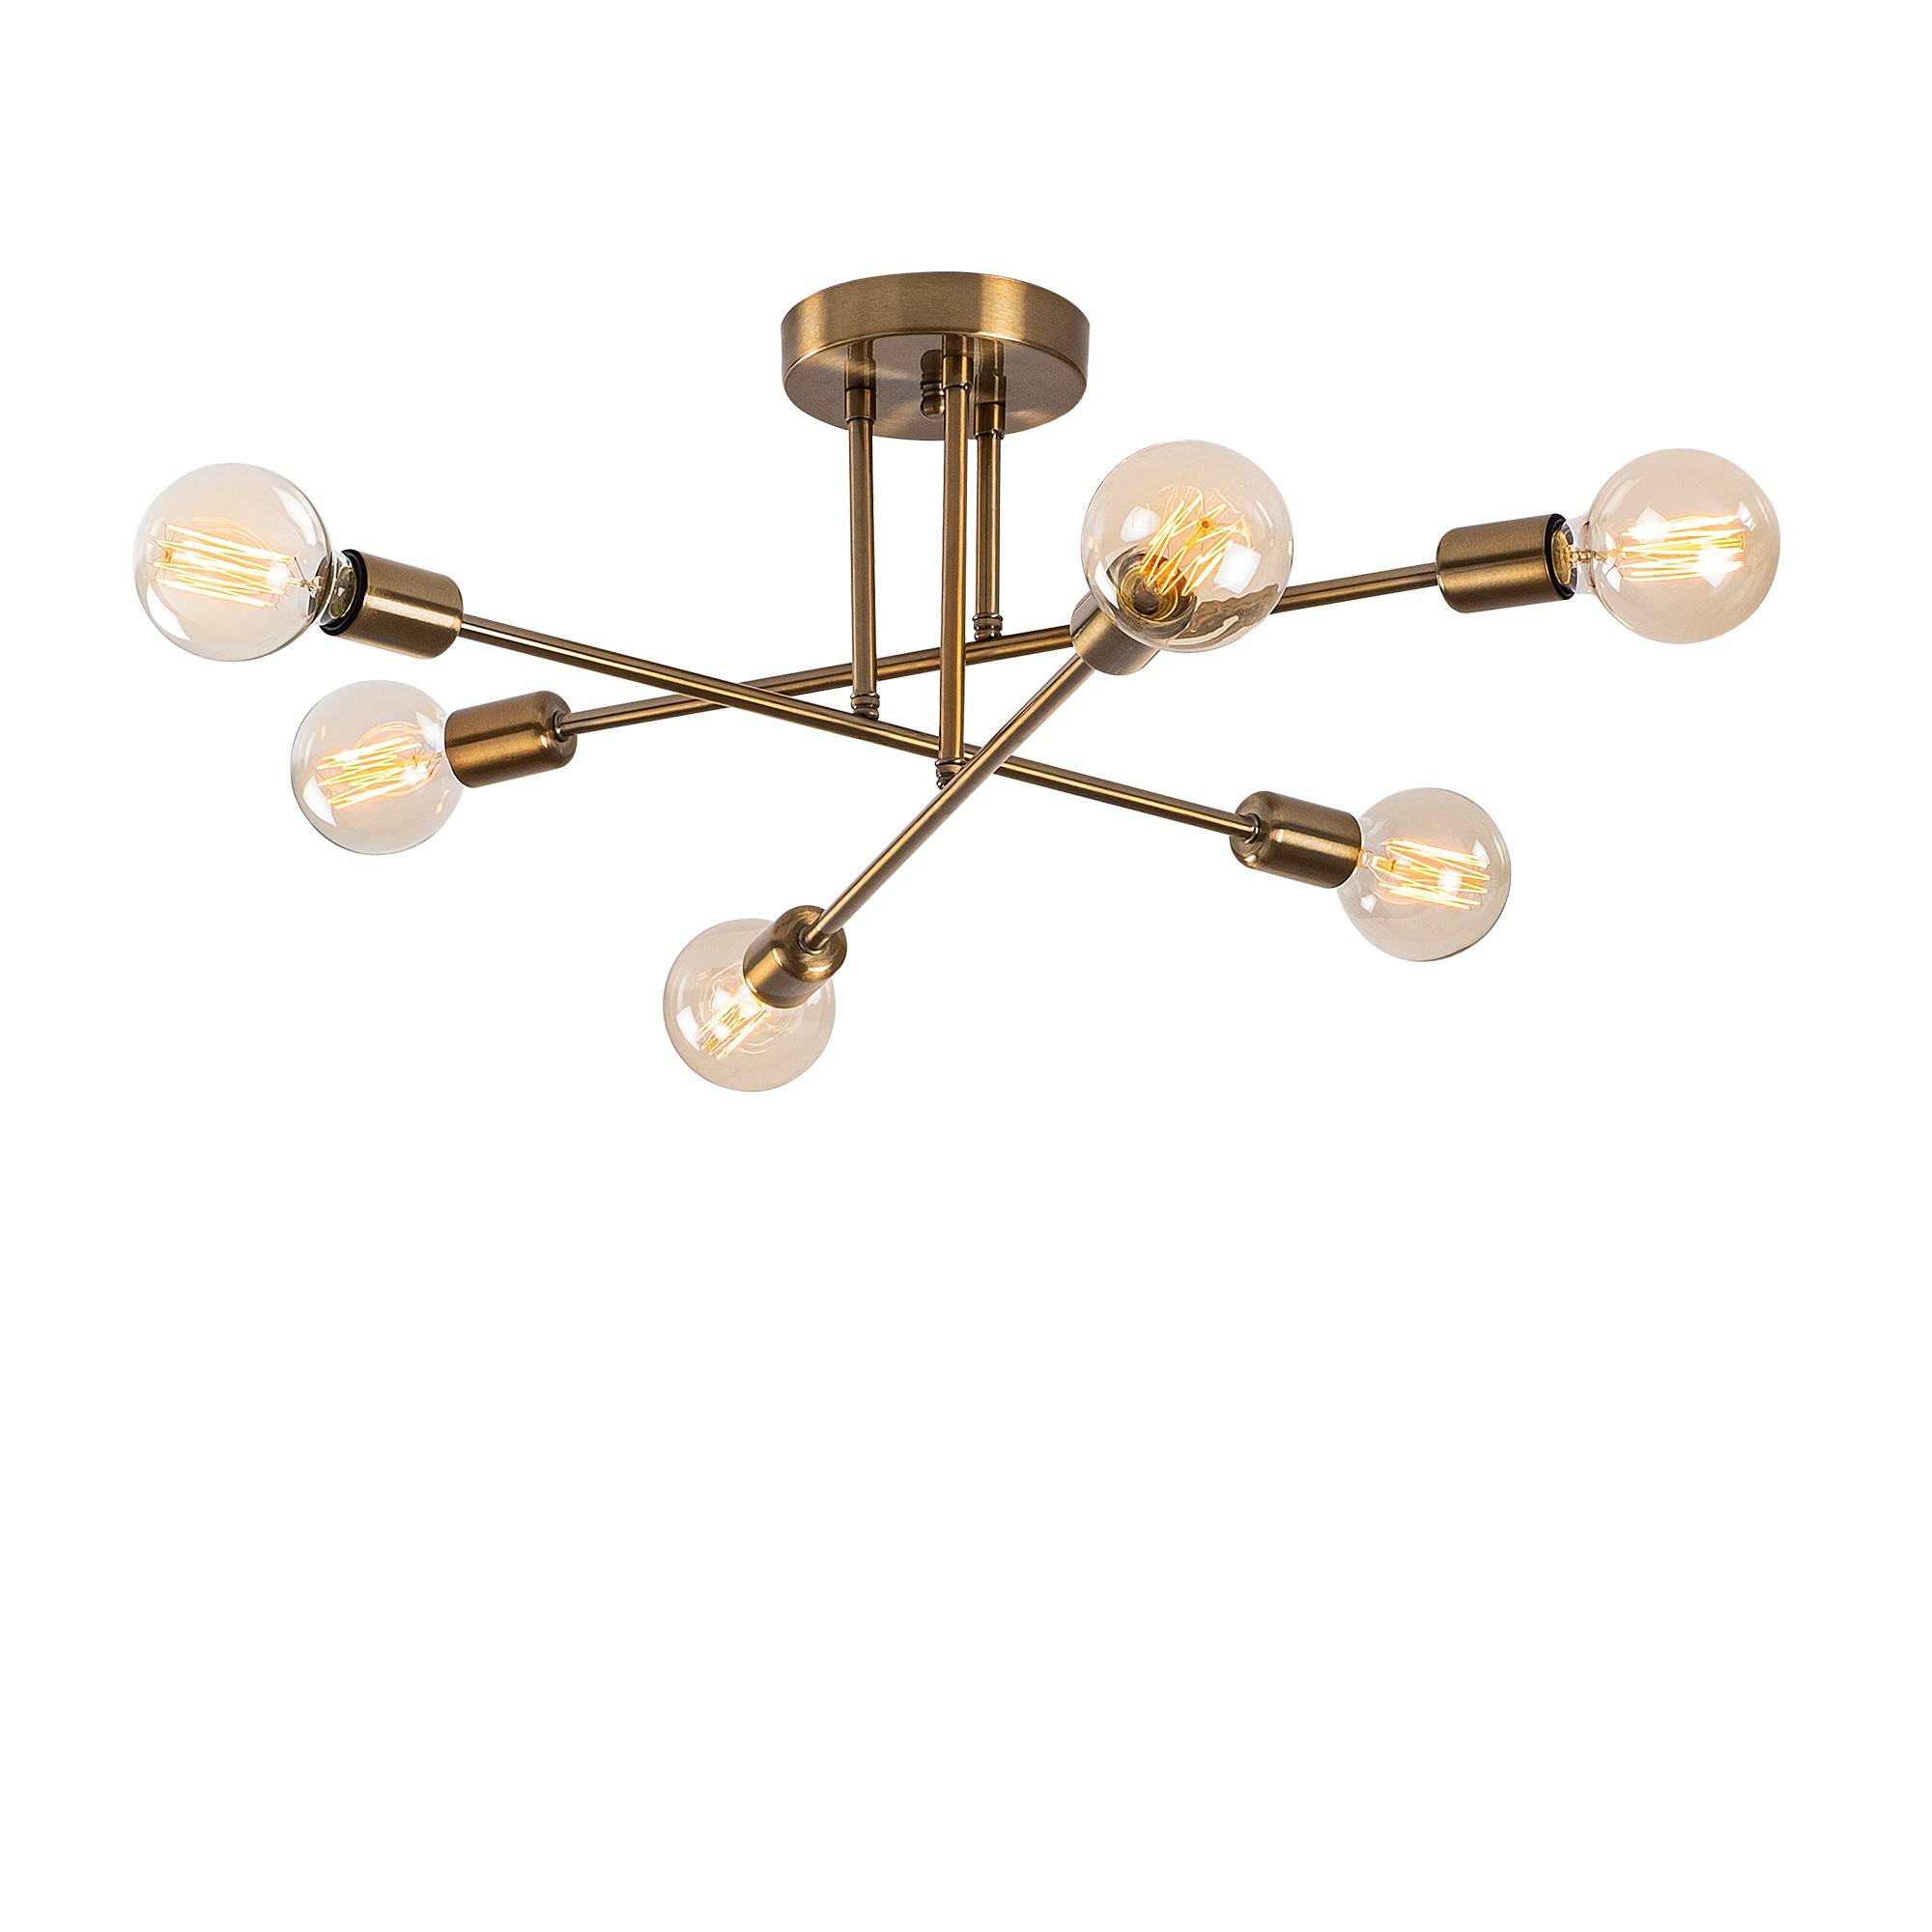 6-lamps hanglamp/plafondlamp Laterna Antiek goud metaal